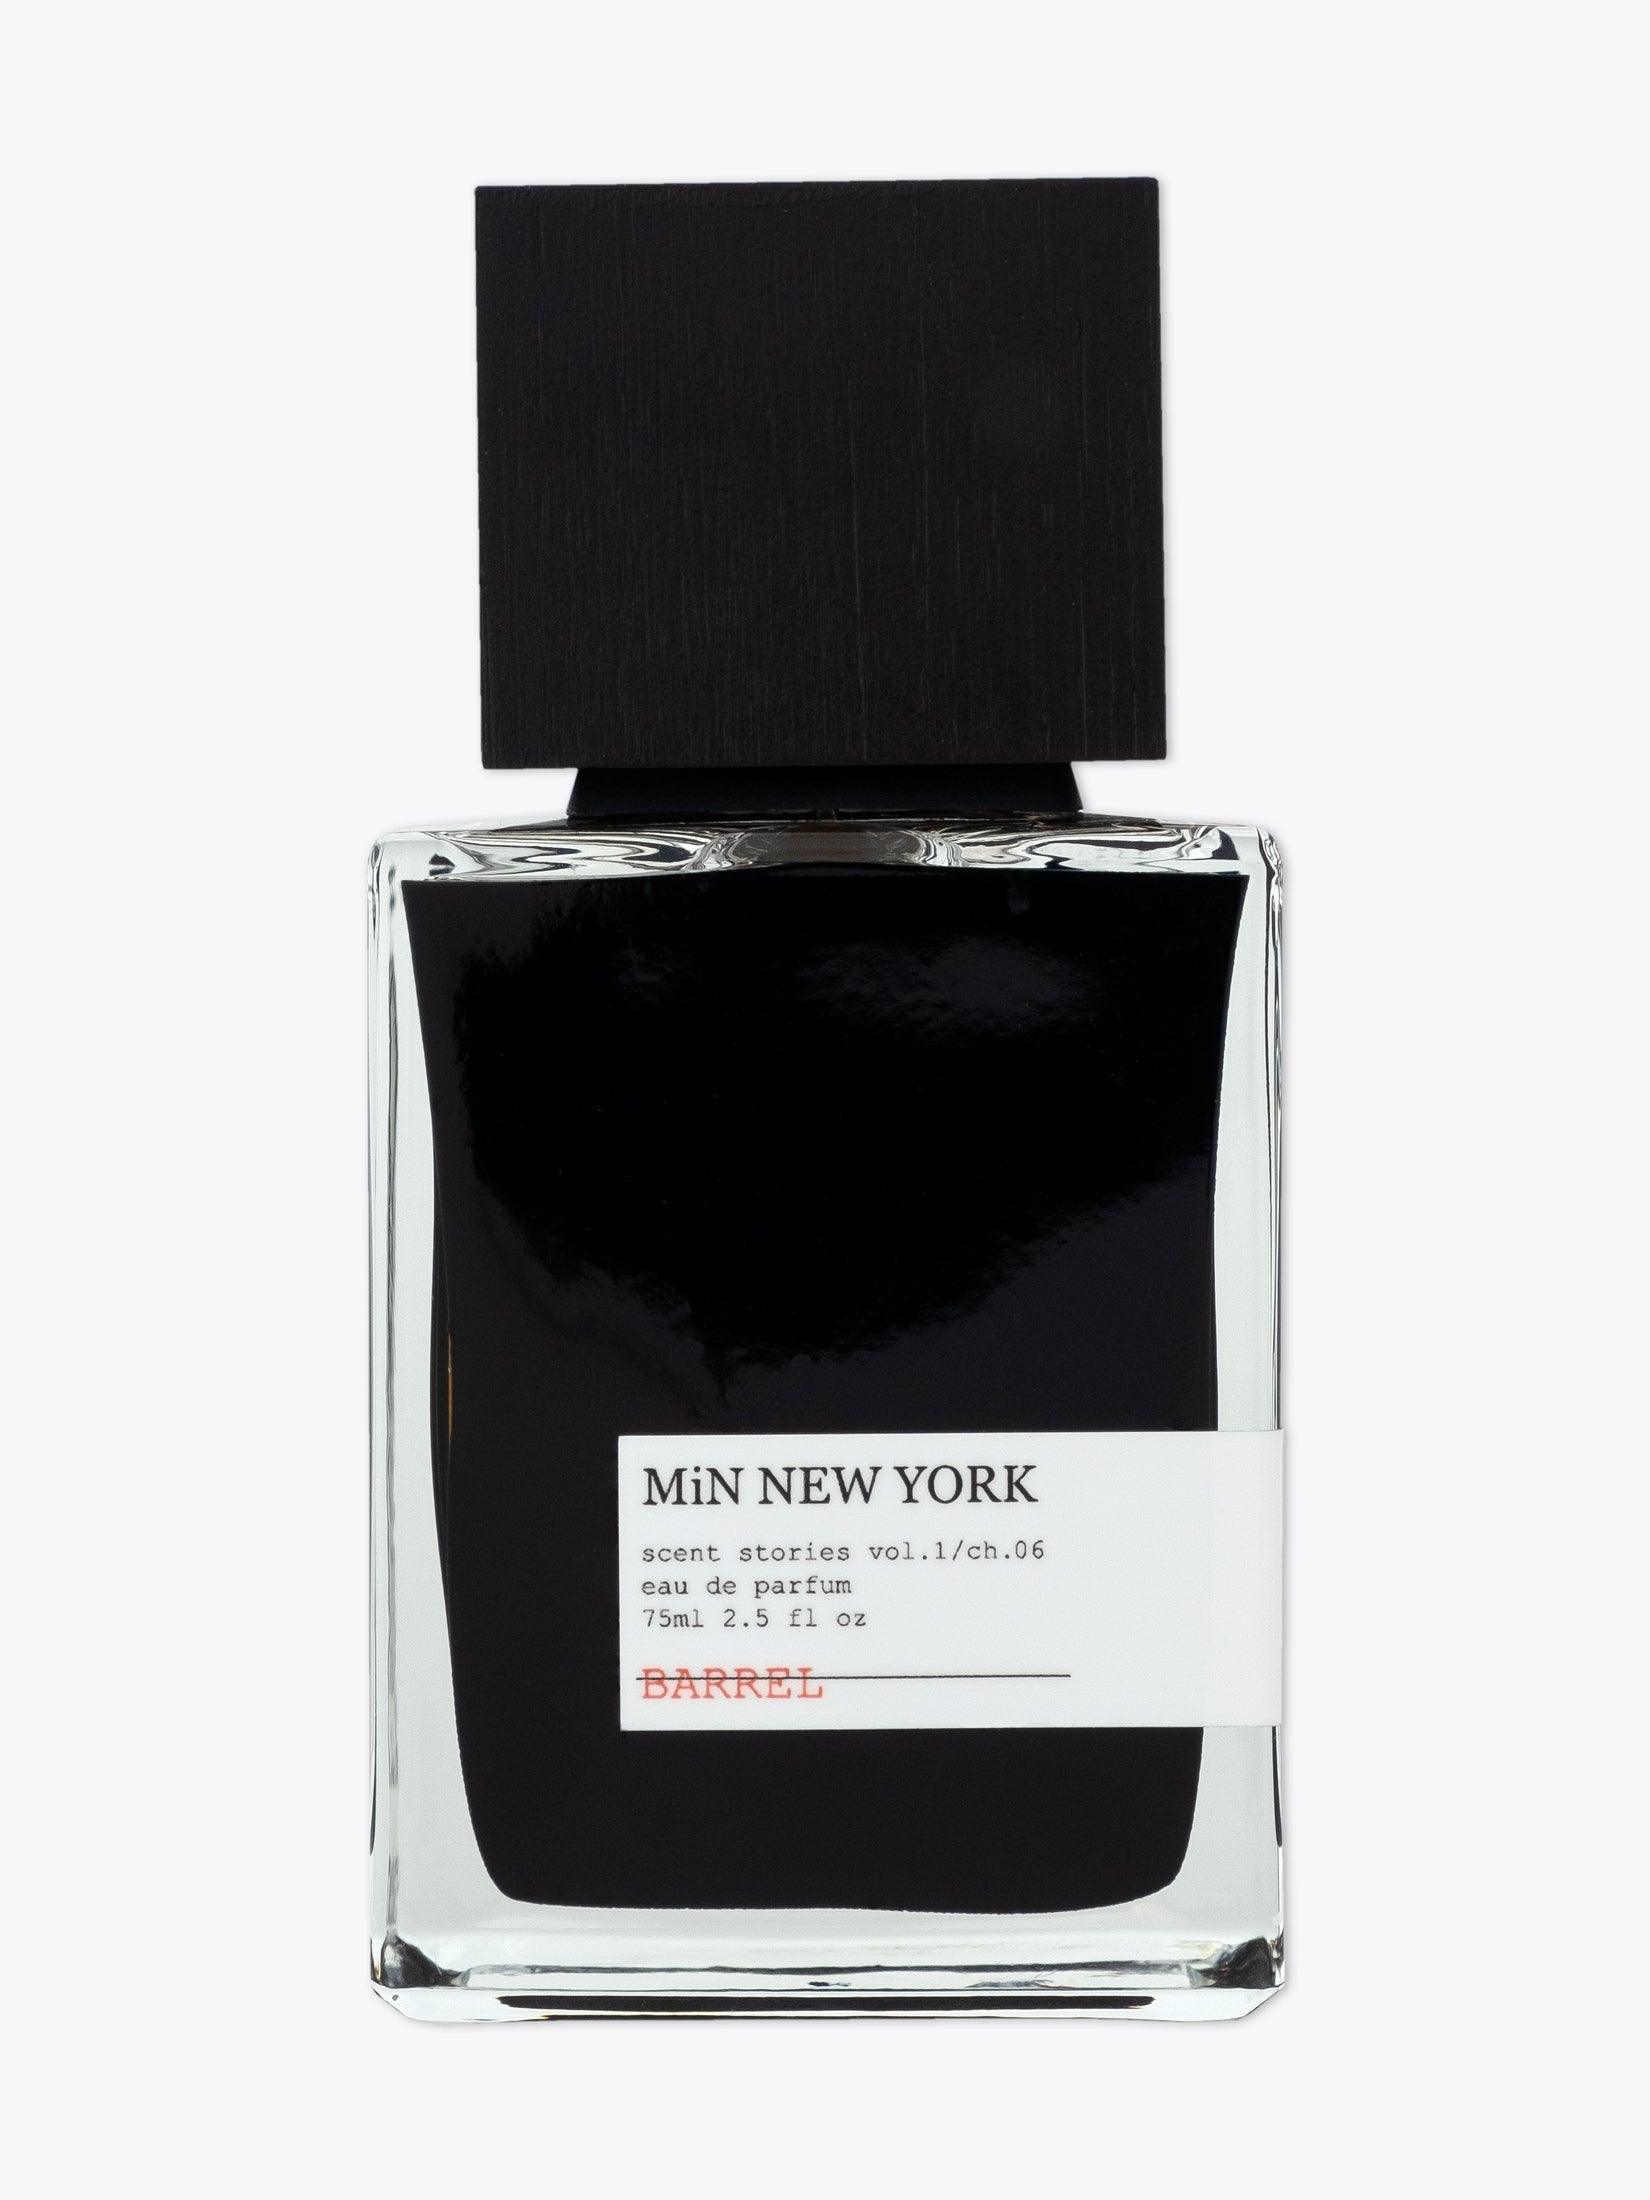 MiN New York Barrel Eau de Parfum 75ml